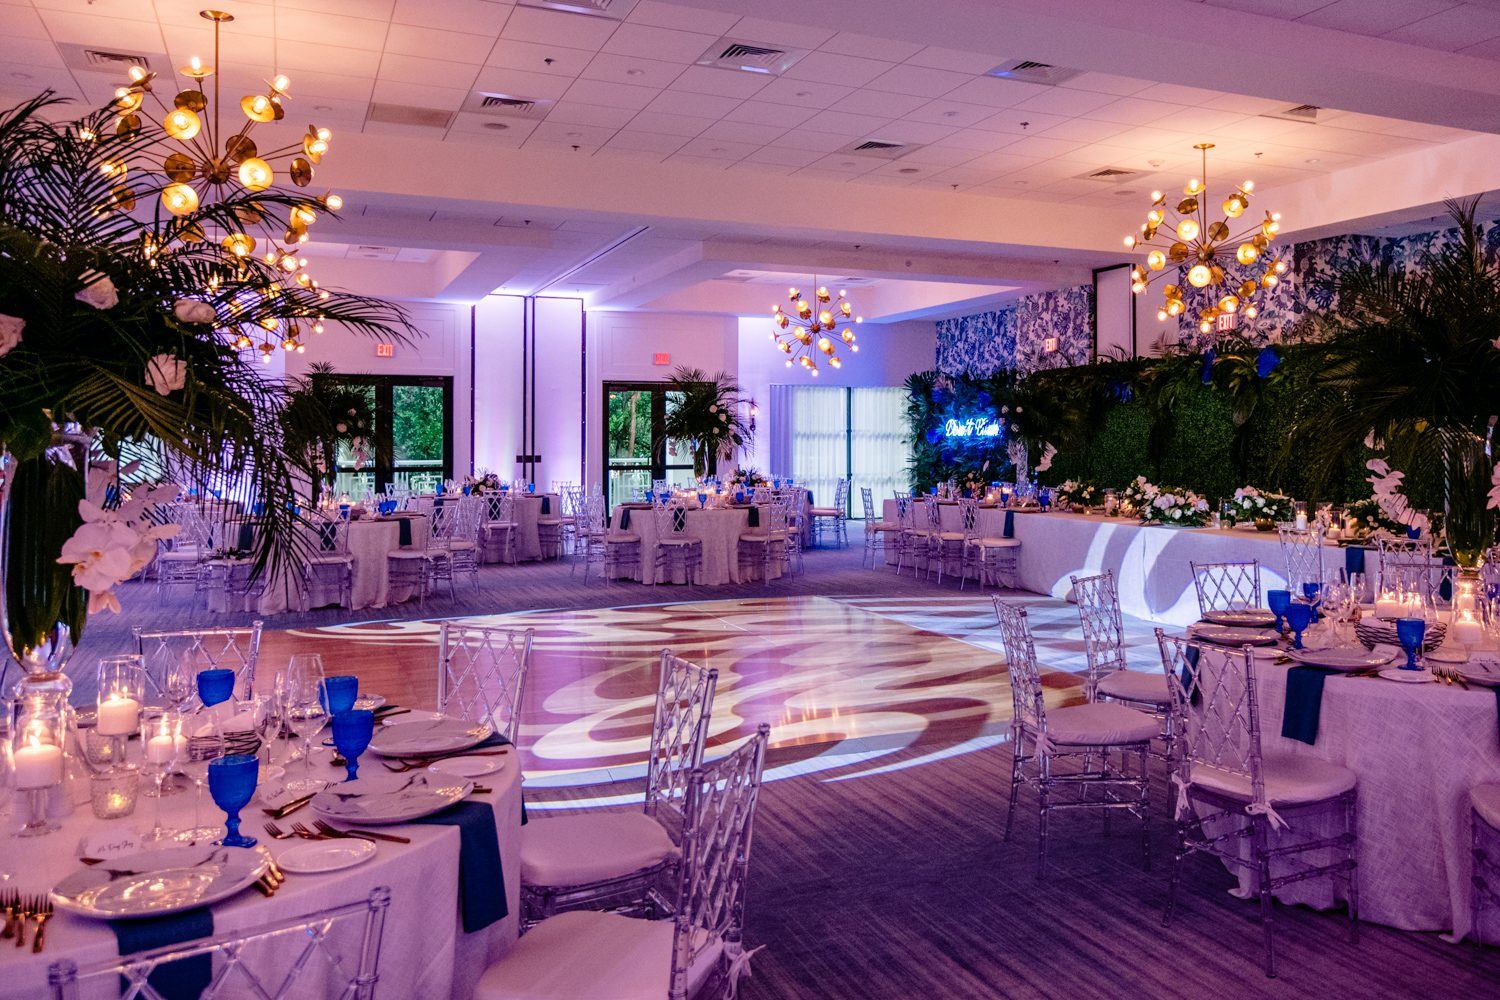 ballroom reception venue interior photo at bakers cay resort